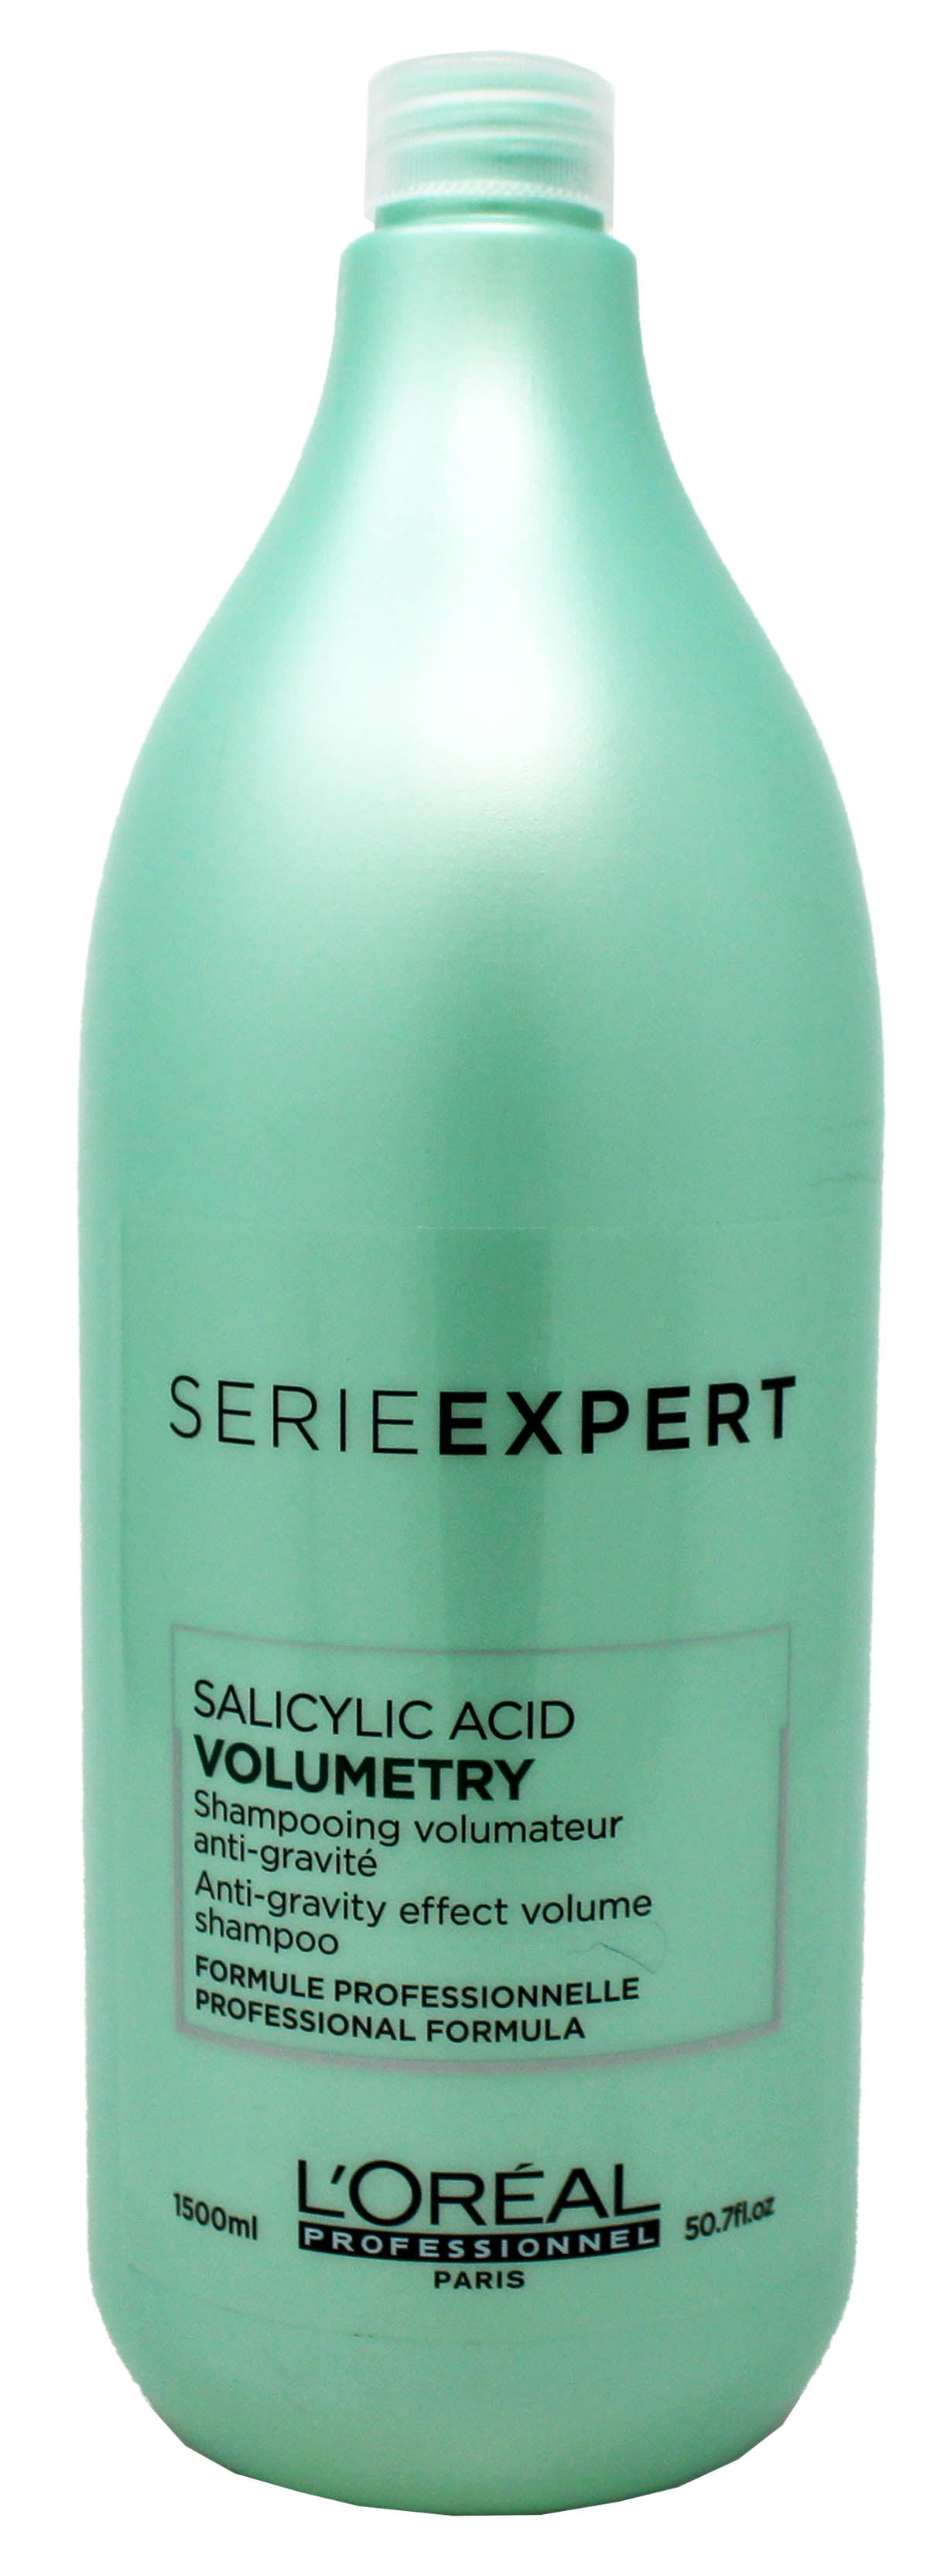 L'Oreal Professionnel Expert Salicylic Acid Volumetry Anti Gravity Effect Shampoo 50.7 Ounce - Walmart.com